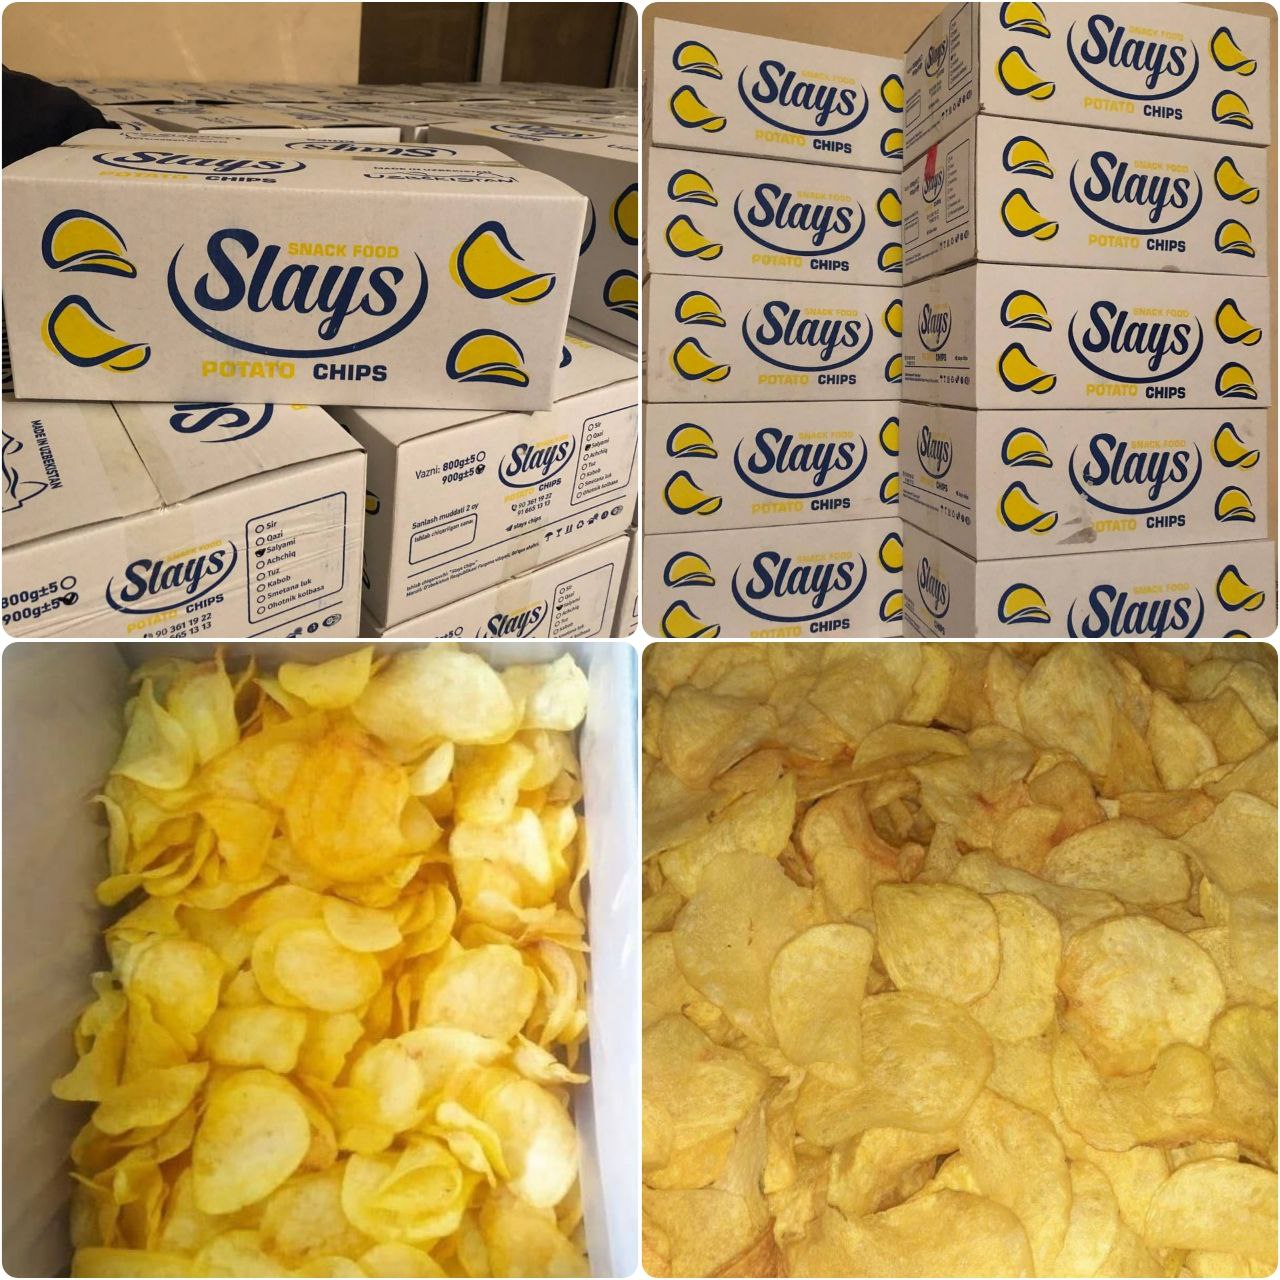 ‘’Slays chips 